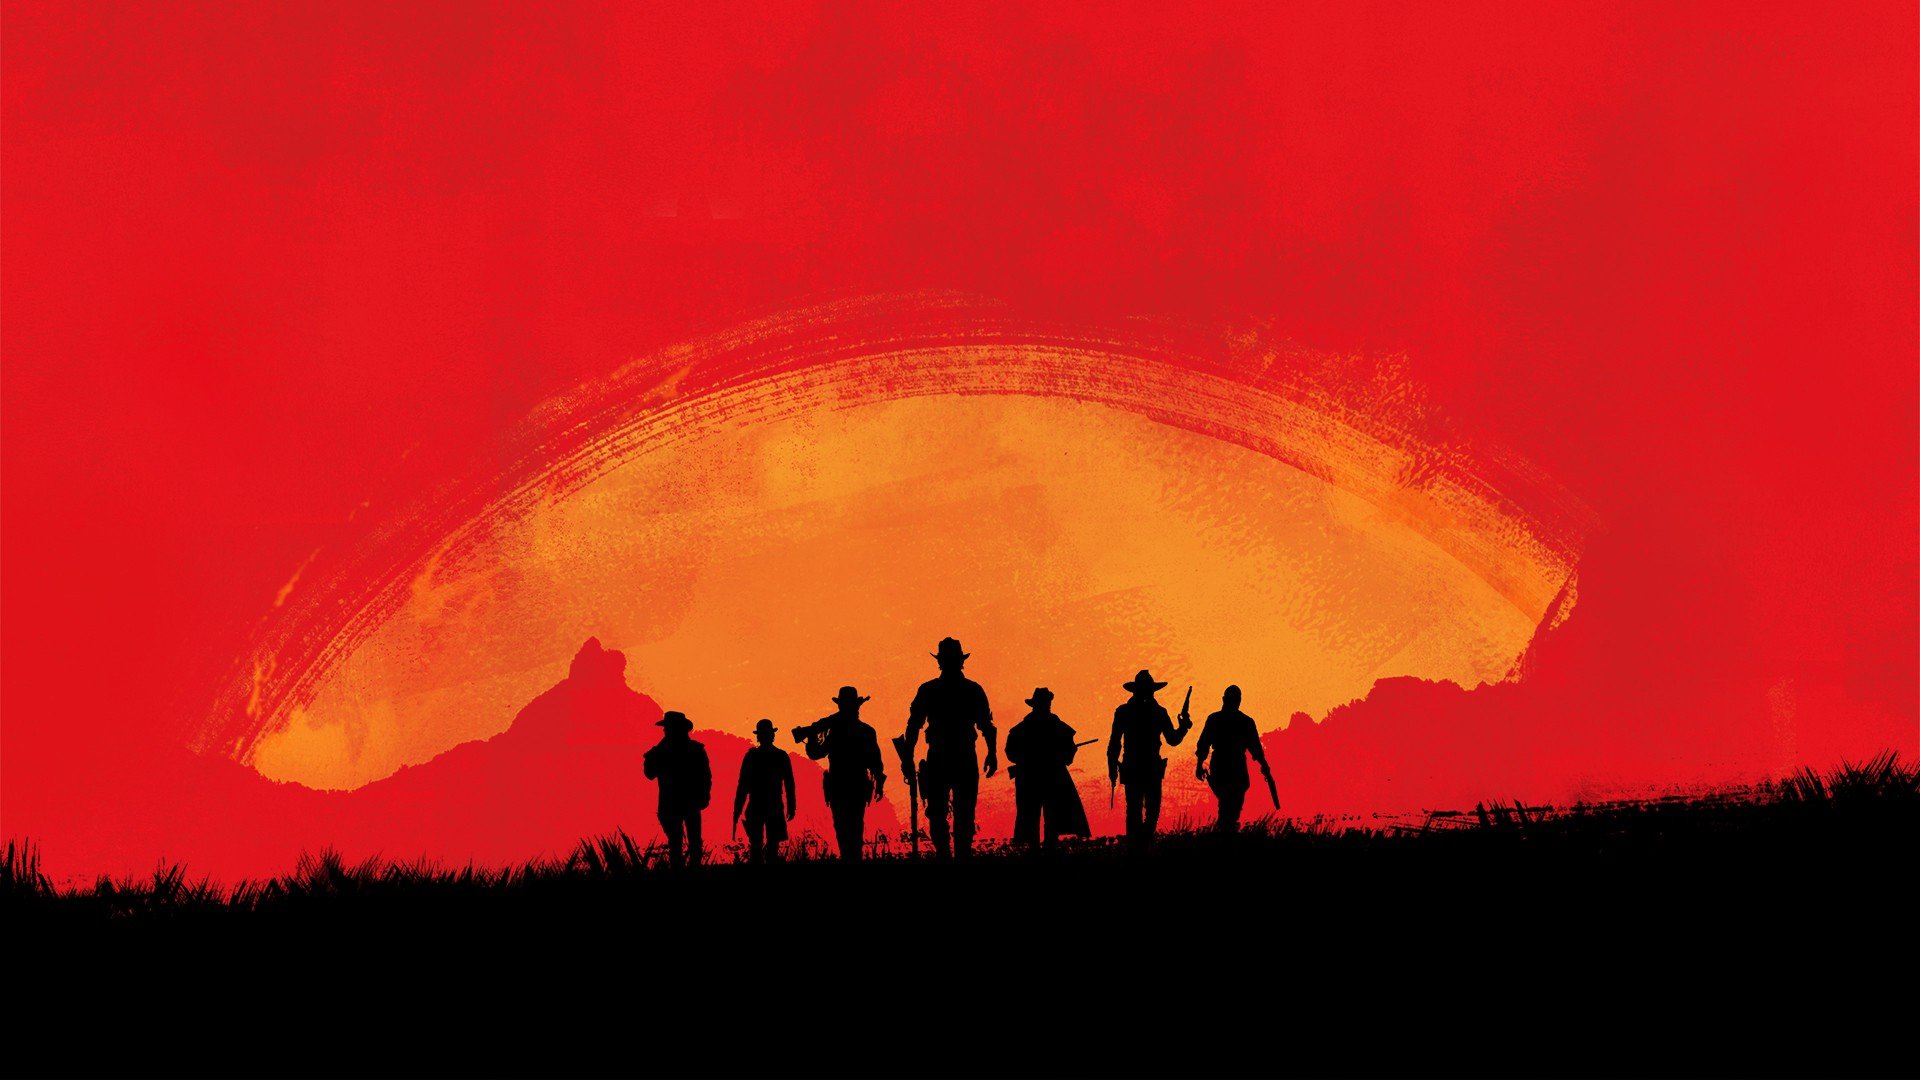 Red Dead 3, Rockstar Games, Red Dead Redemption 2 Wallpaper